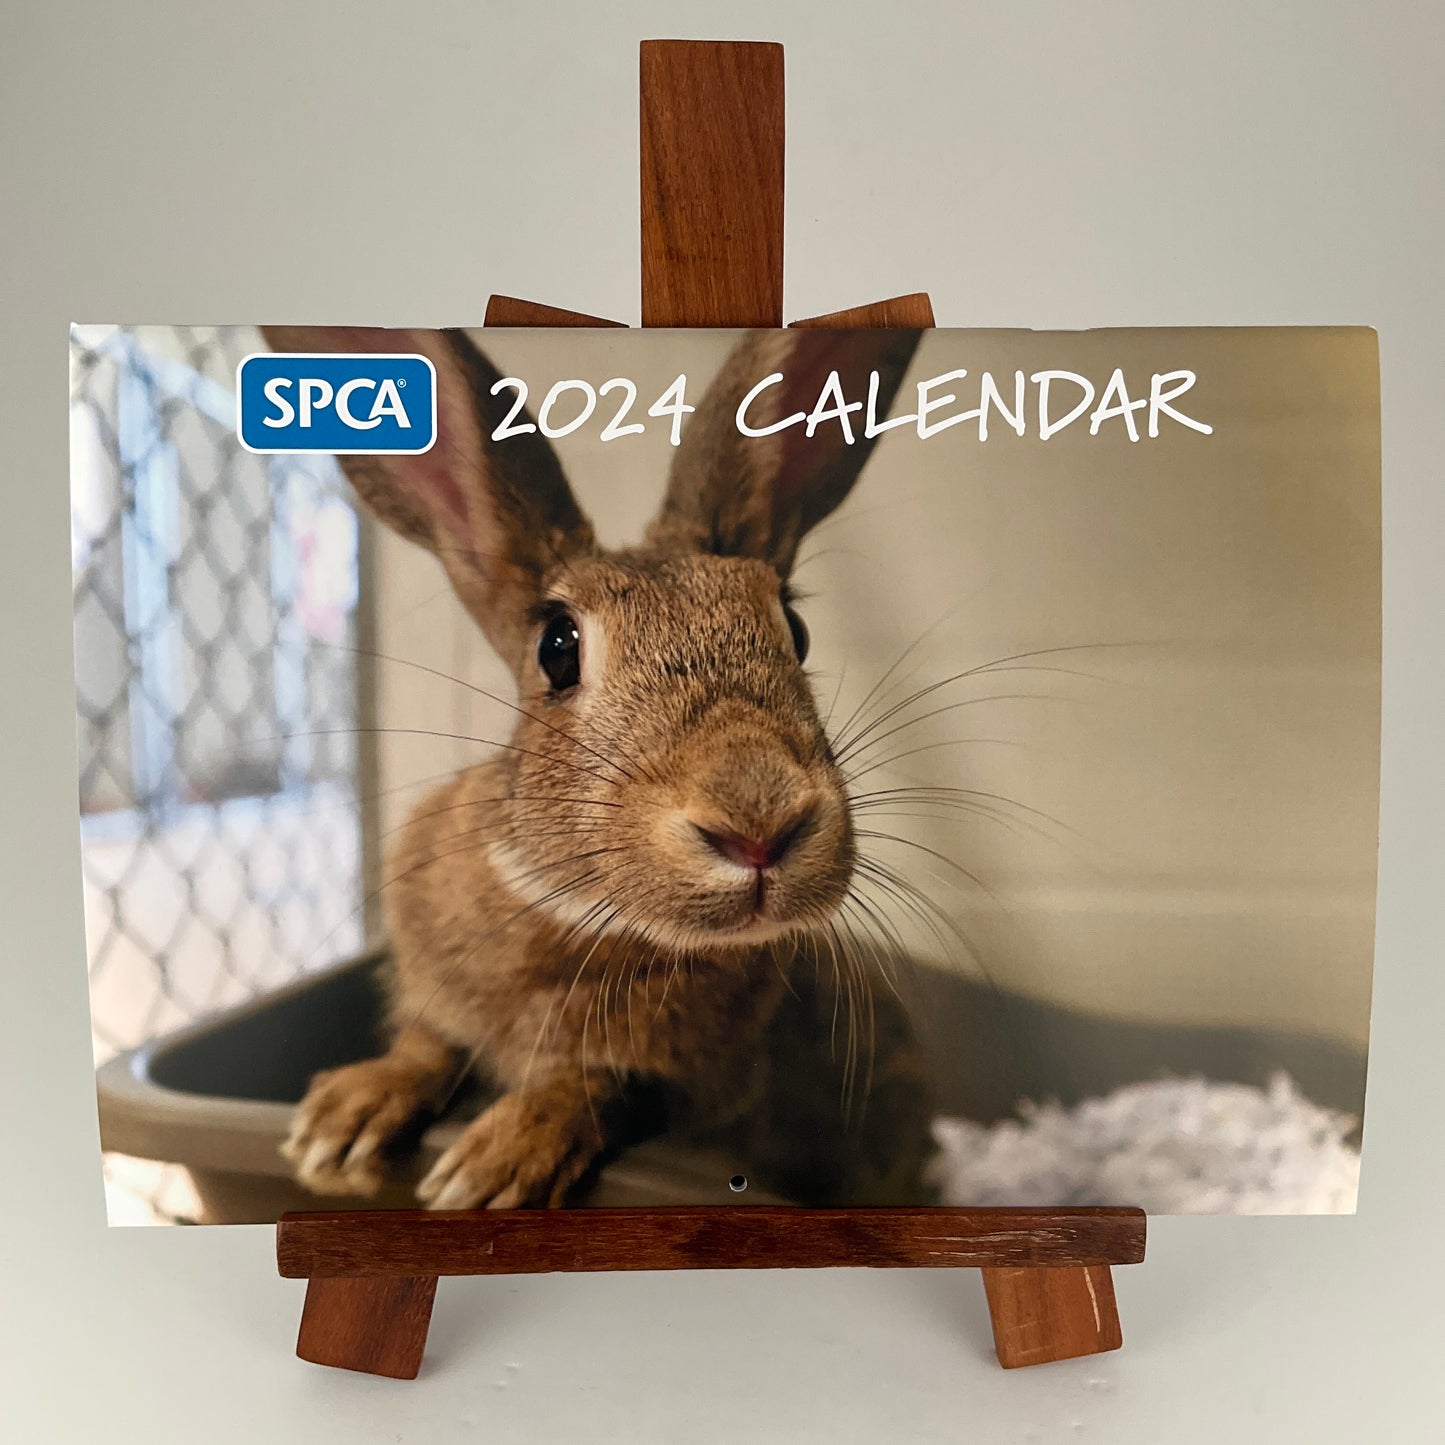 SPCA 2024 Annual Calendar - Other Animals